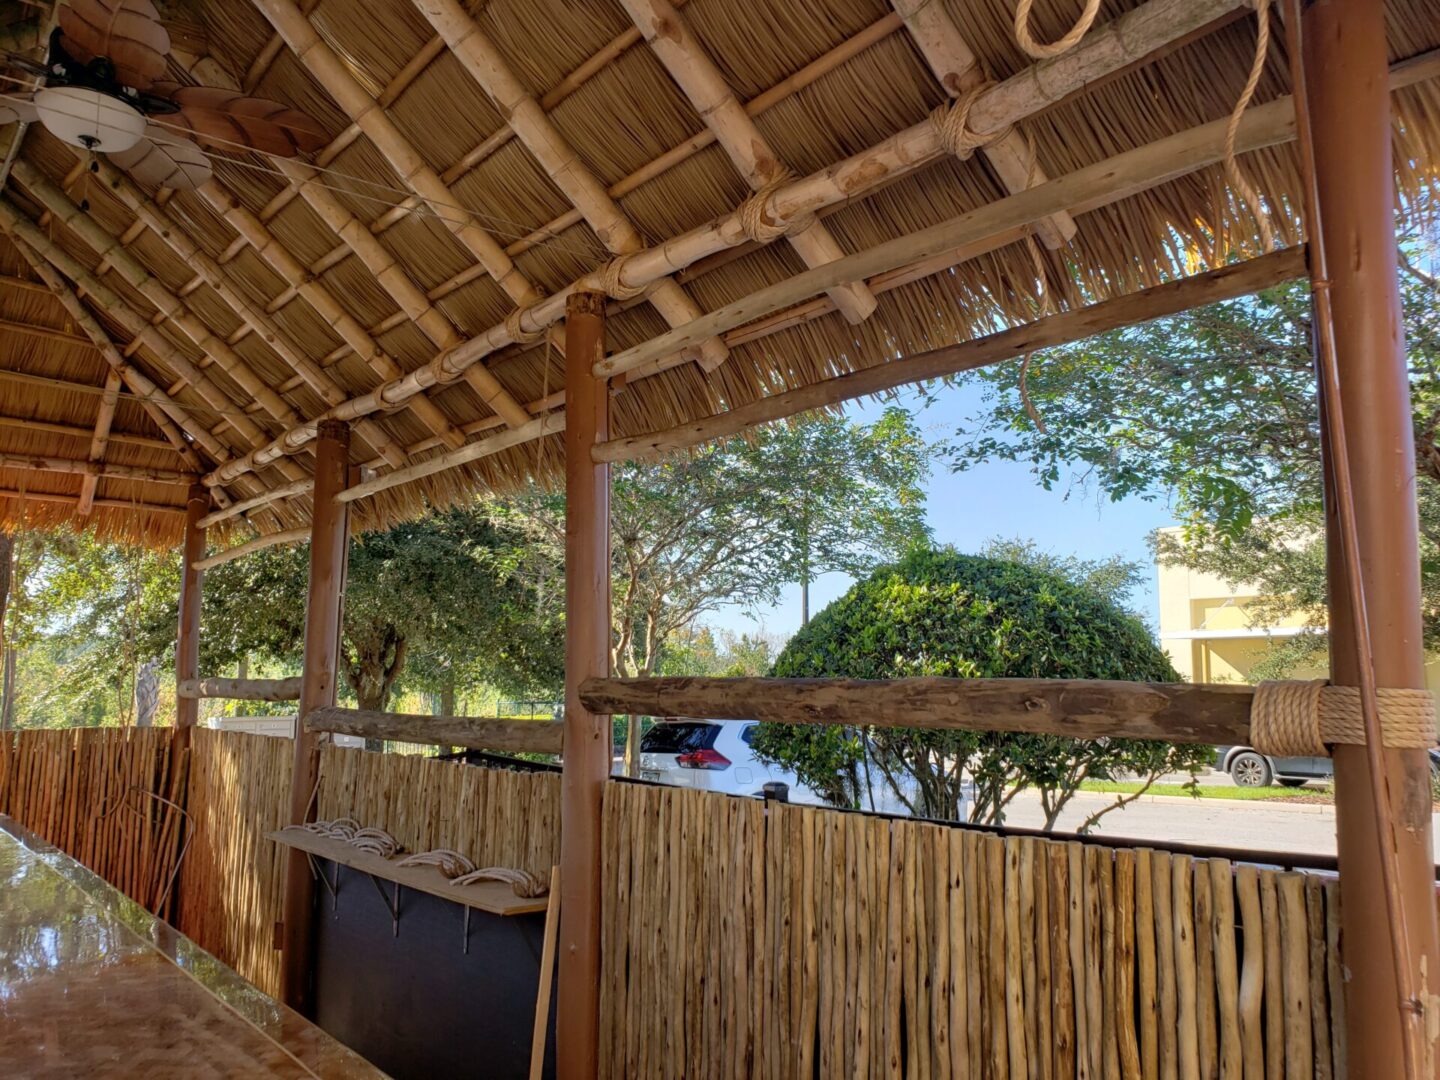 Bamboo walls in a tiki hut